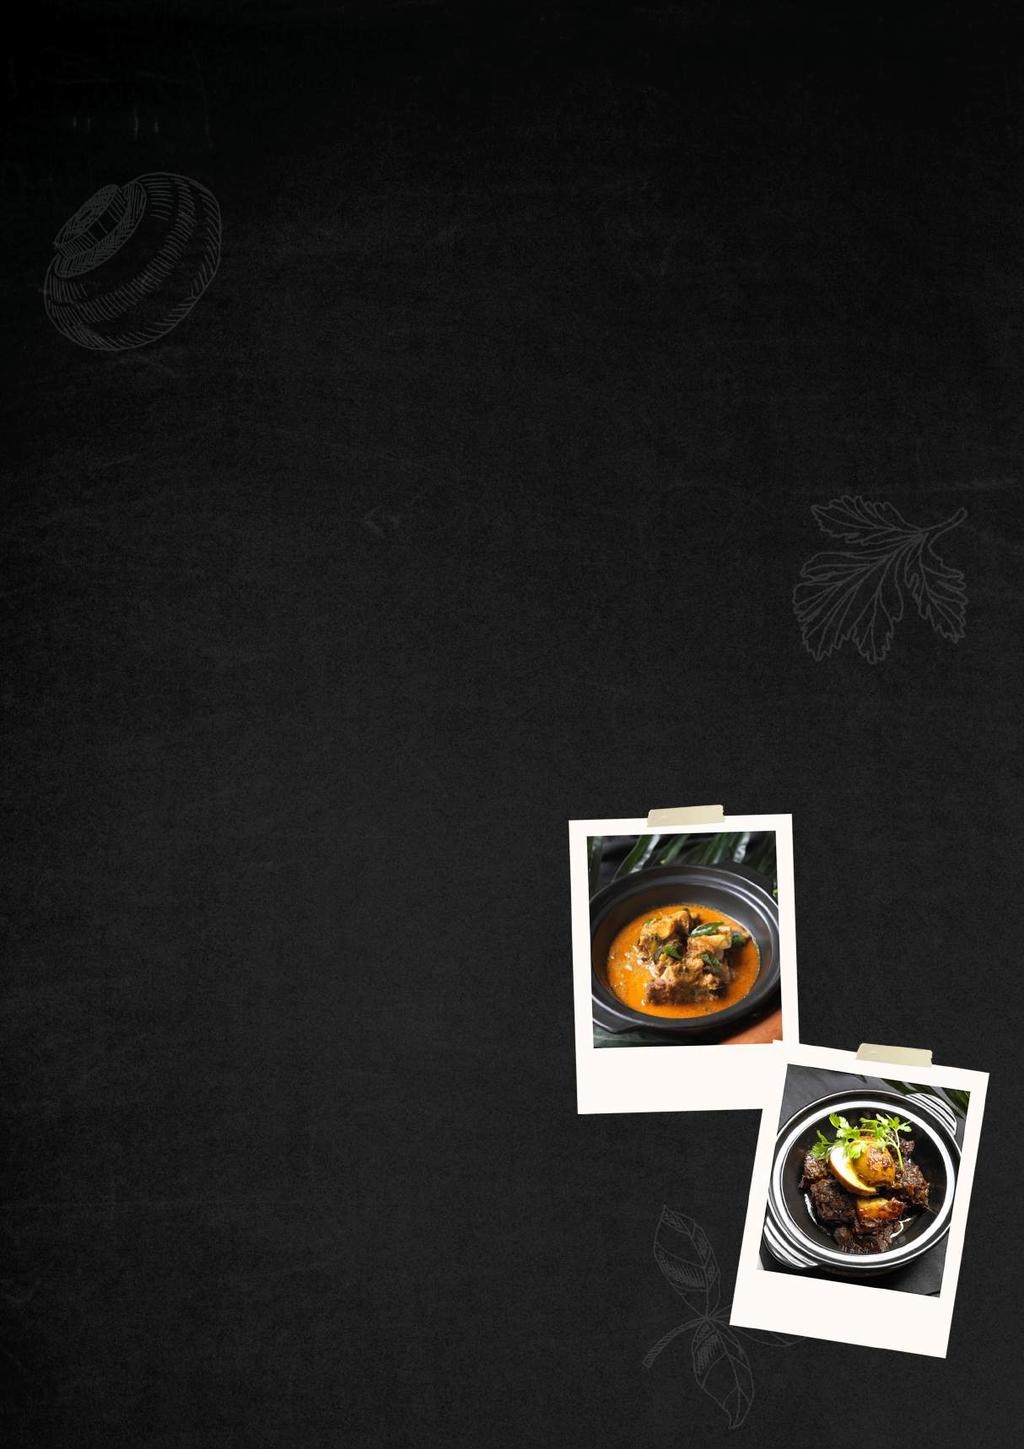 SWEET & SOUR FISH 28 Sliced barramundi, capsicum & pineapple topped with sesame seeds GARLIC KING PRAWN 48 Sautéed fresh king prawn in garlic, curry leaves, chili & creamy sauce CHICKEN PONGTEH 26